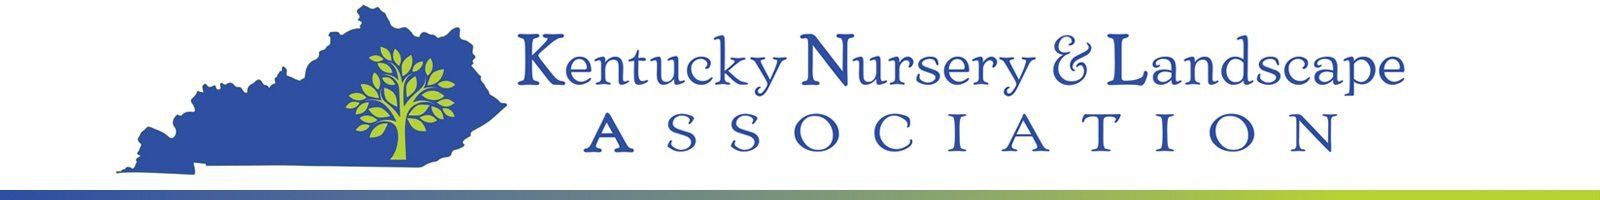 Kentucky Nursery & Landscape Association logo